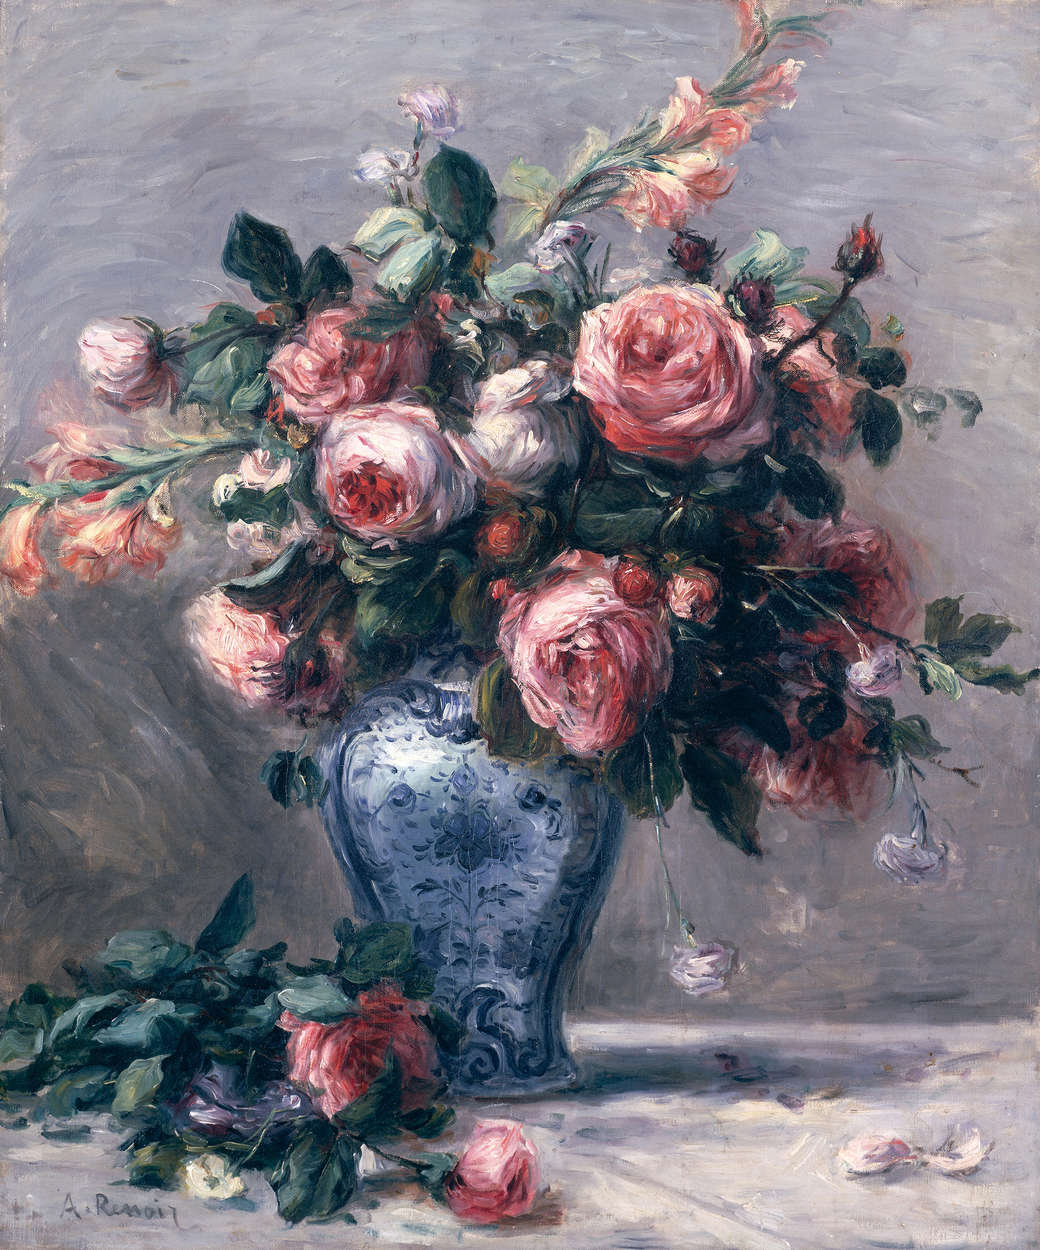             Photo wallpaper "Rose in a vase" by Pierre Auguste Renoir
        